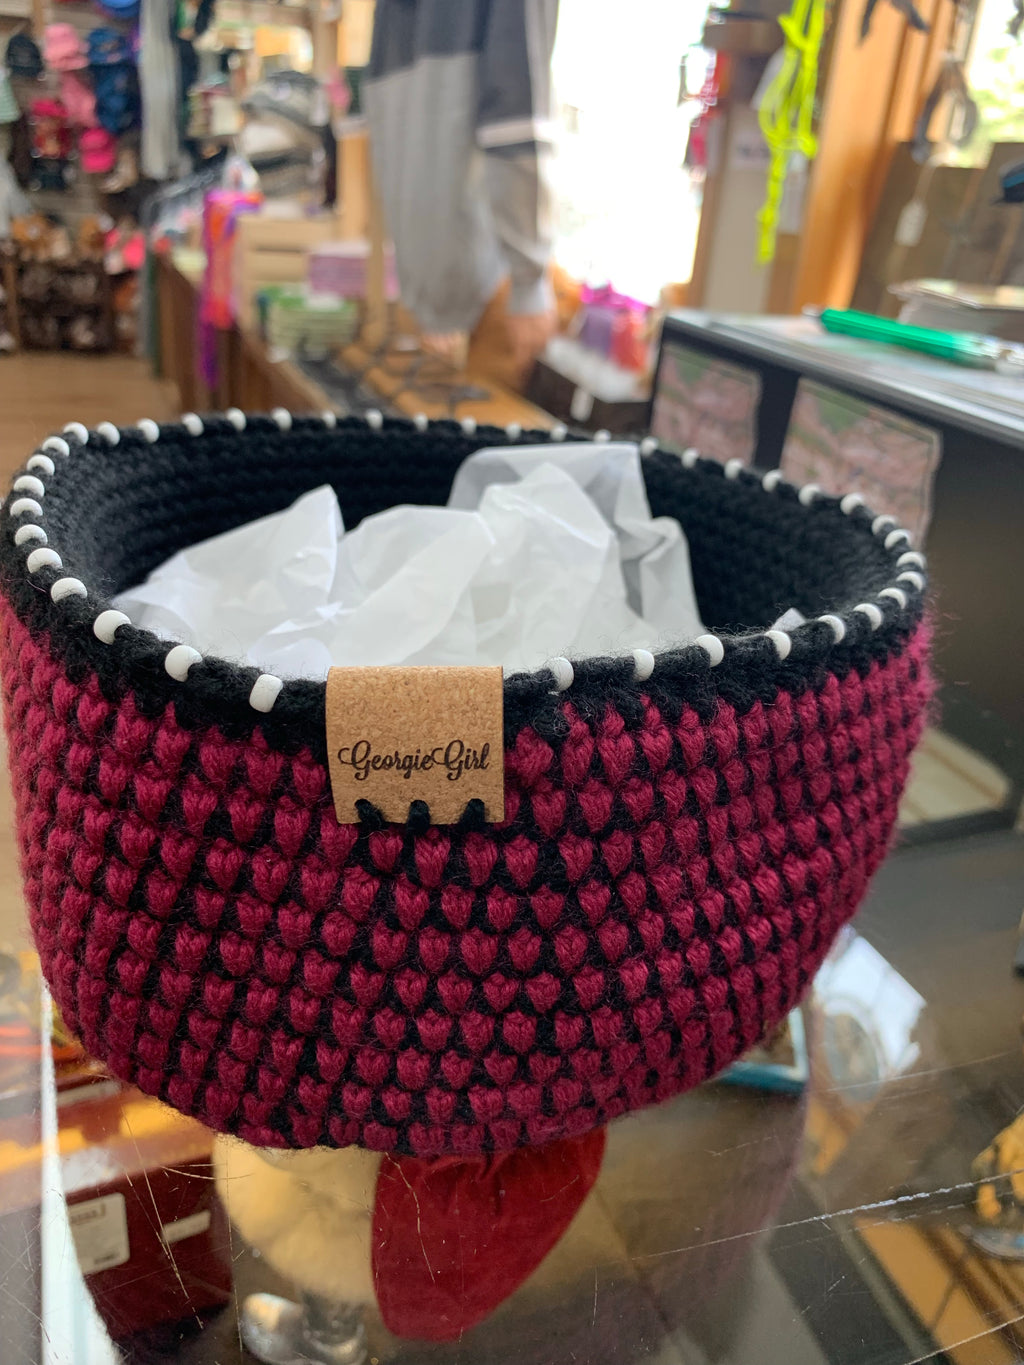 Georgie Girl Baskets with beads